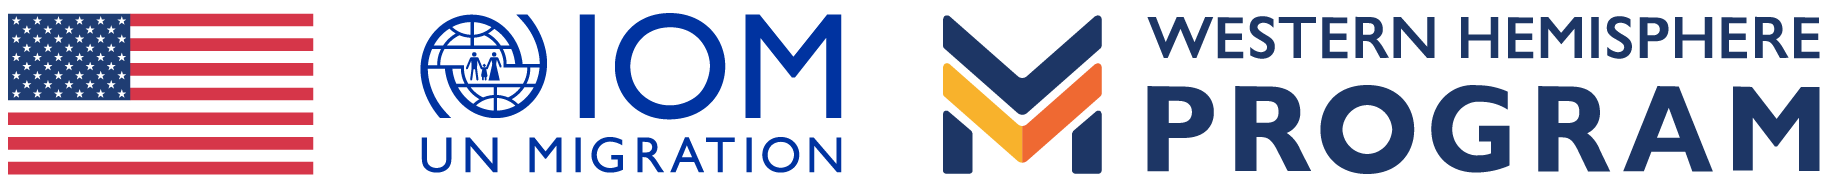 Logo Programa Mesoamerica